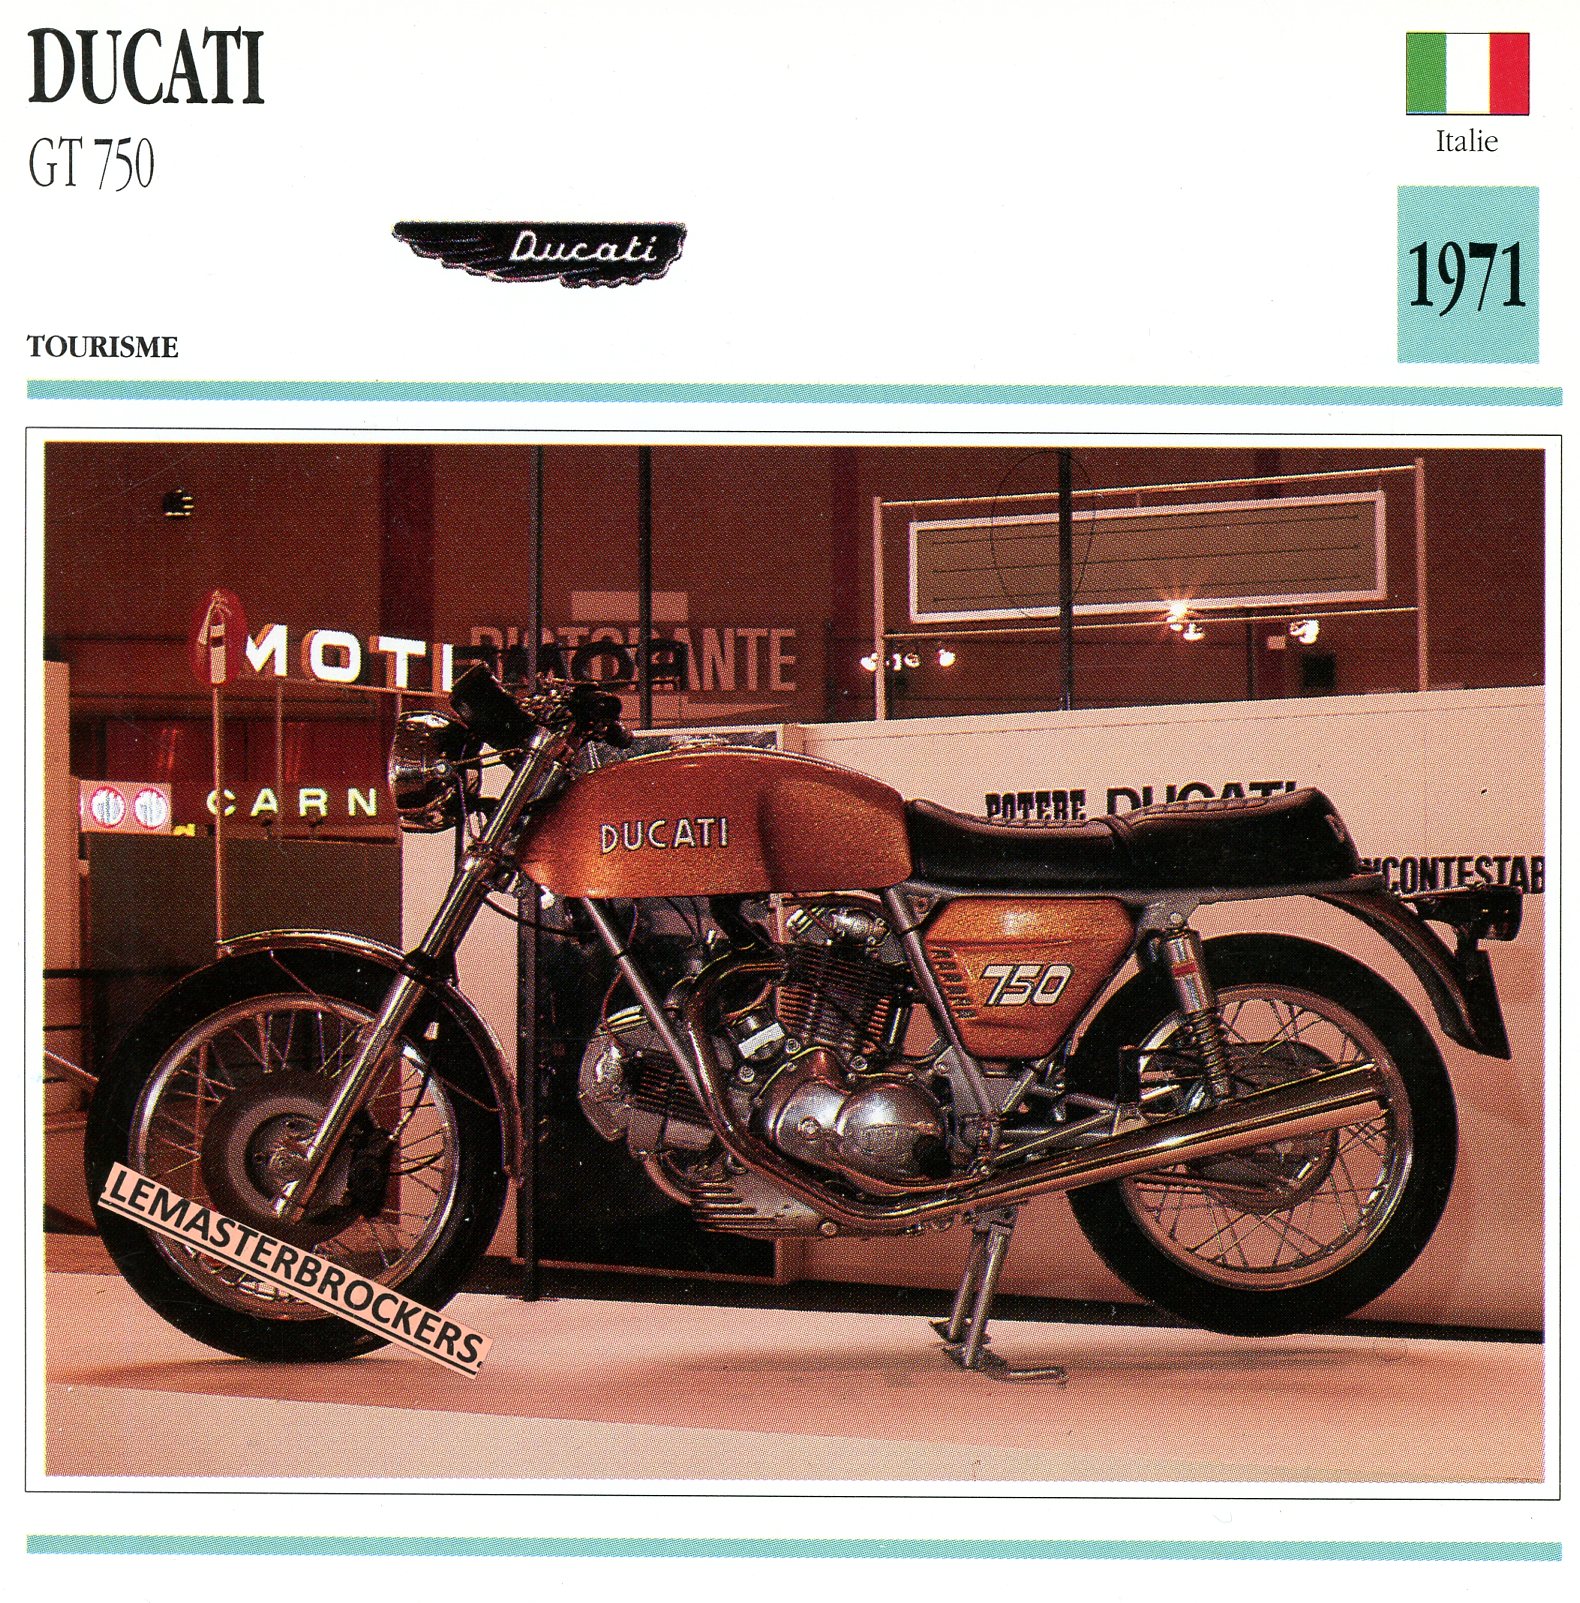 FICHE-MOTO-DUCATI-GT750-1961-LEMASTERBROCKERS-CARS-CARD